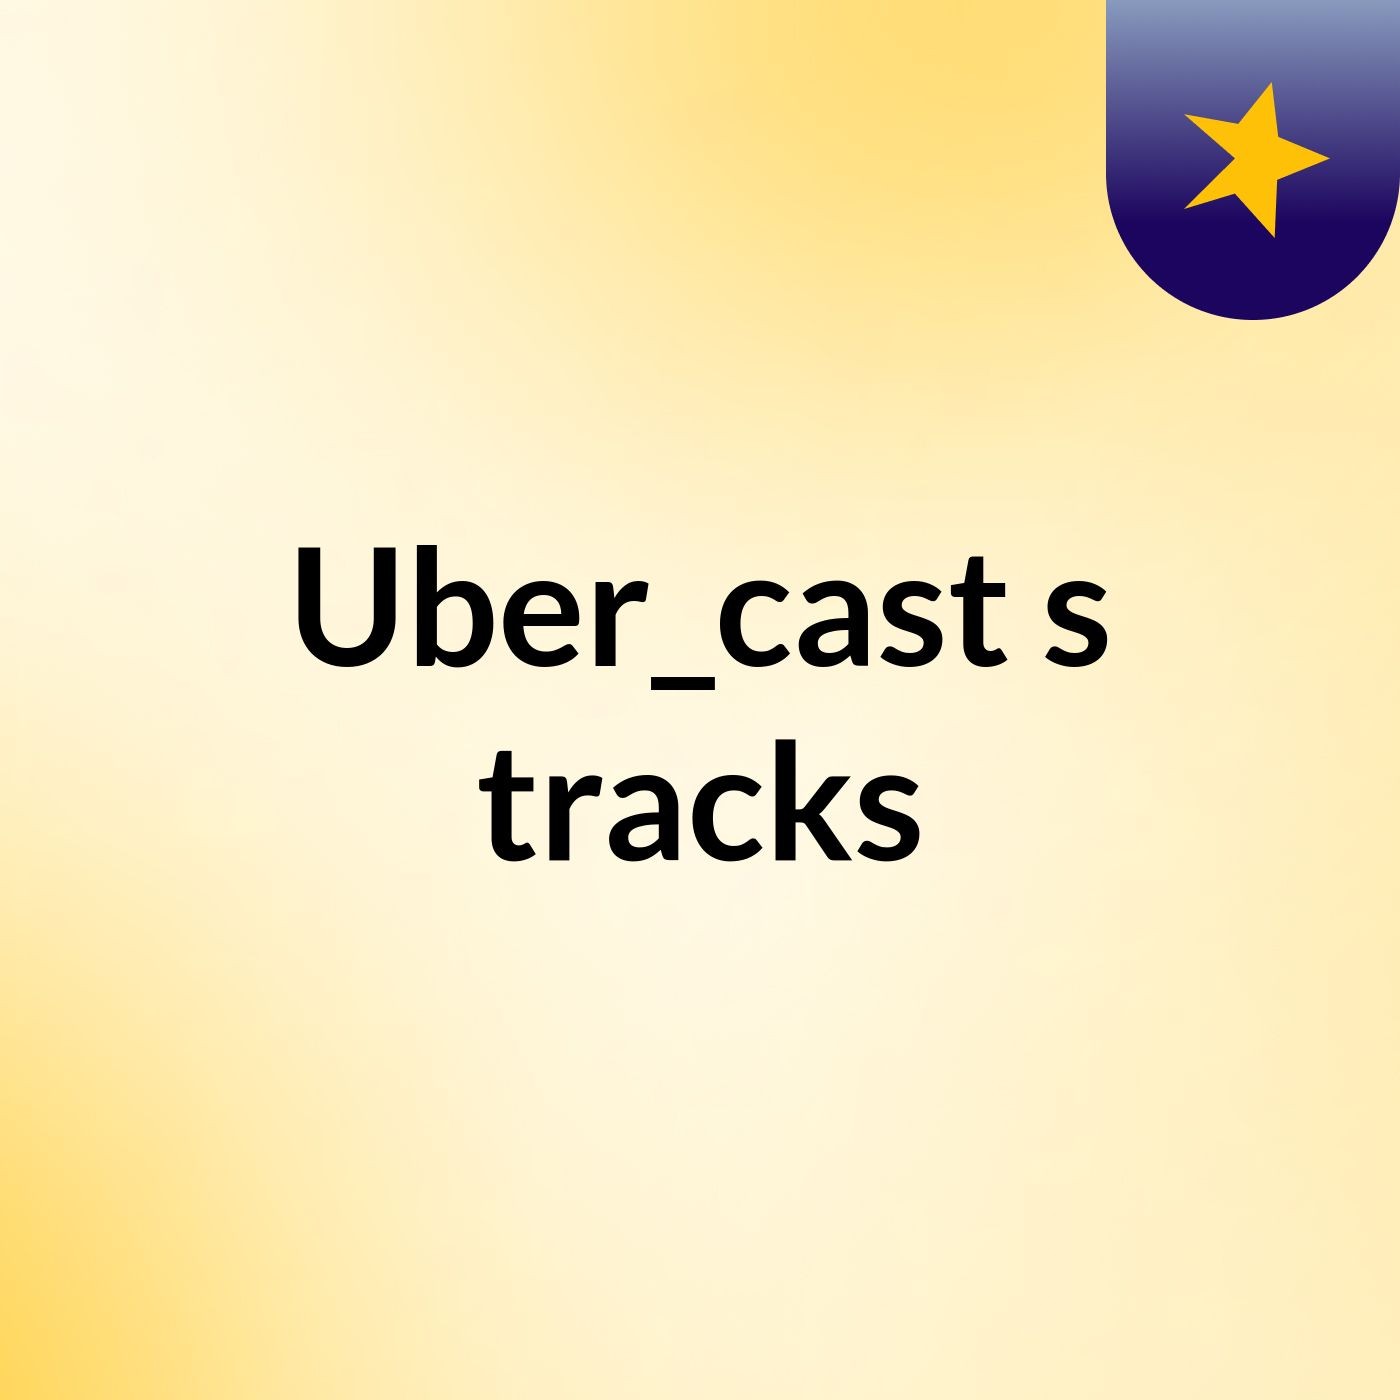 Uber_cast's tracks